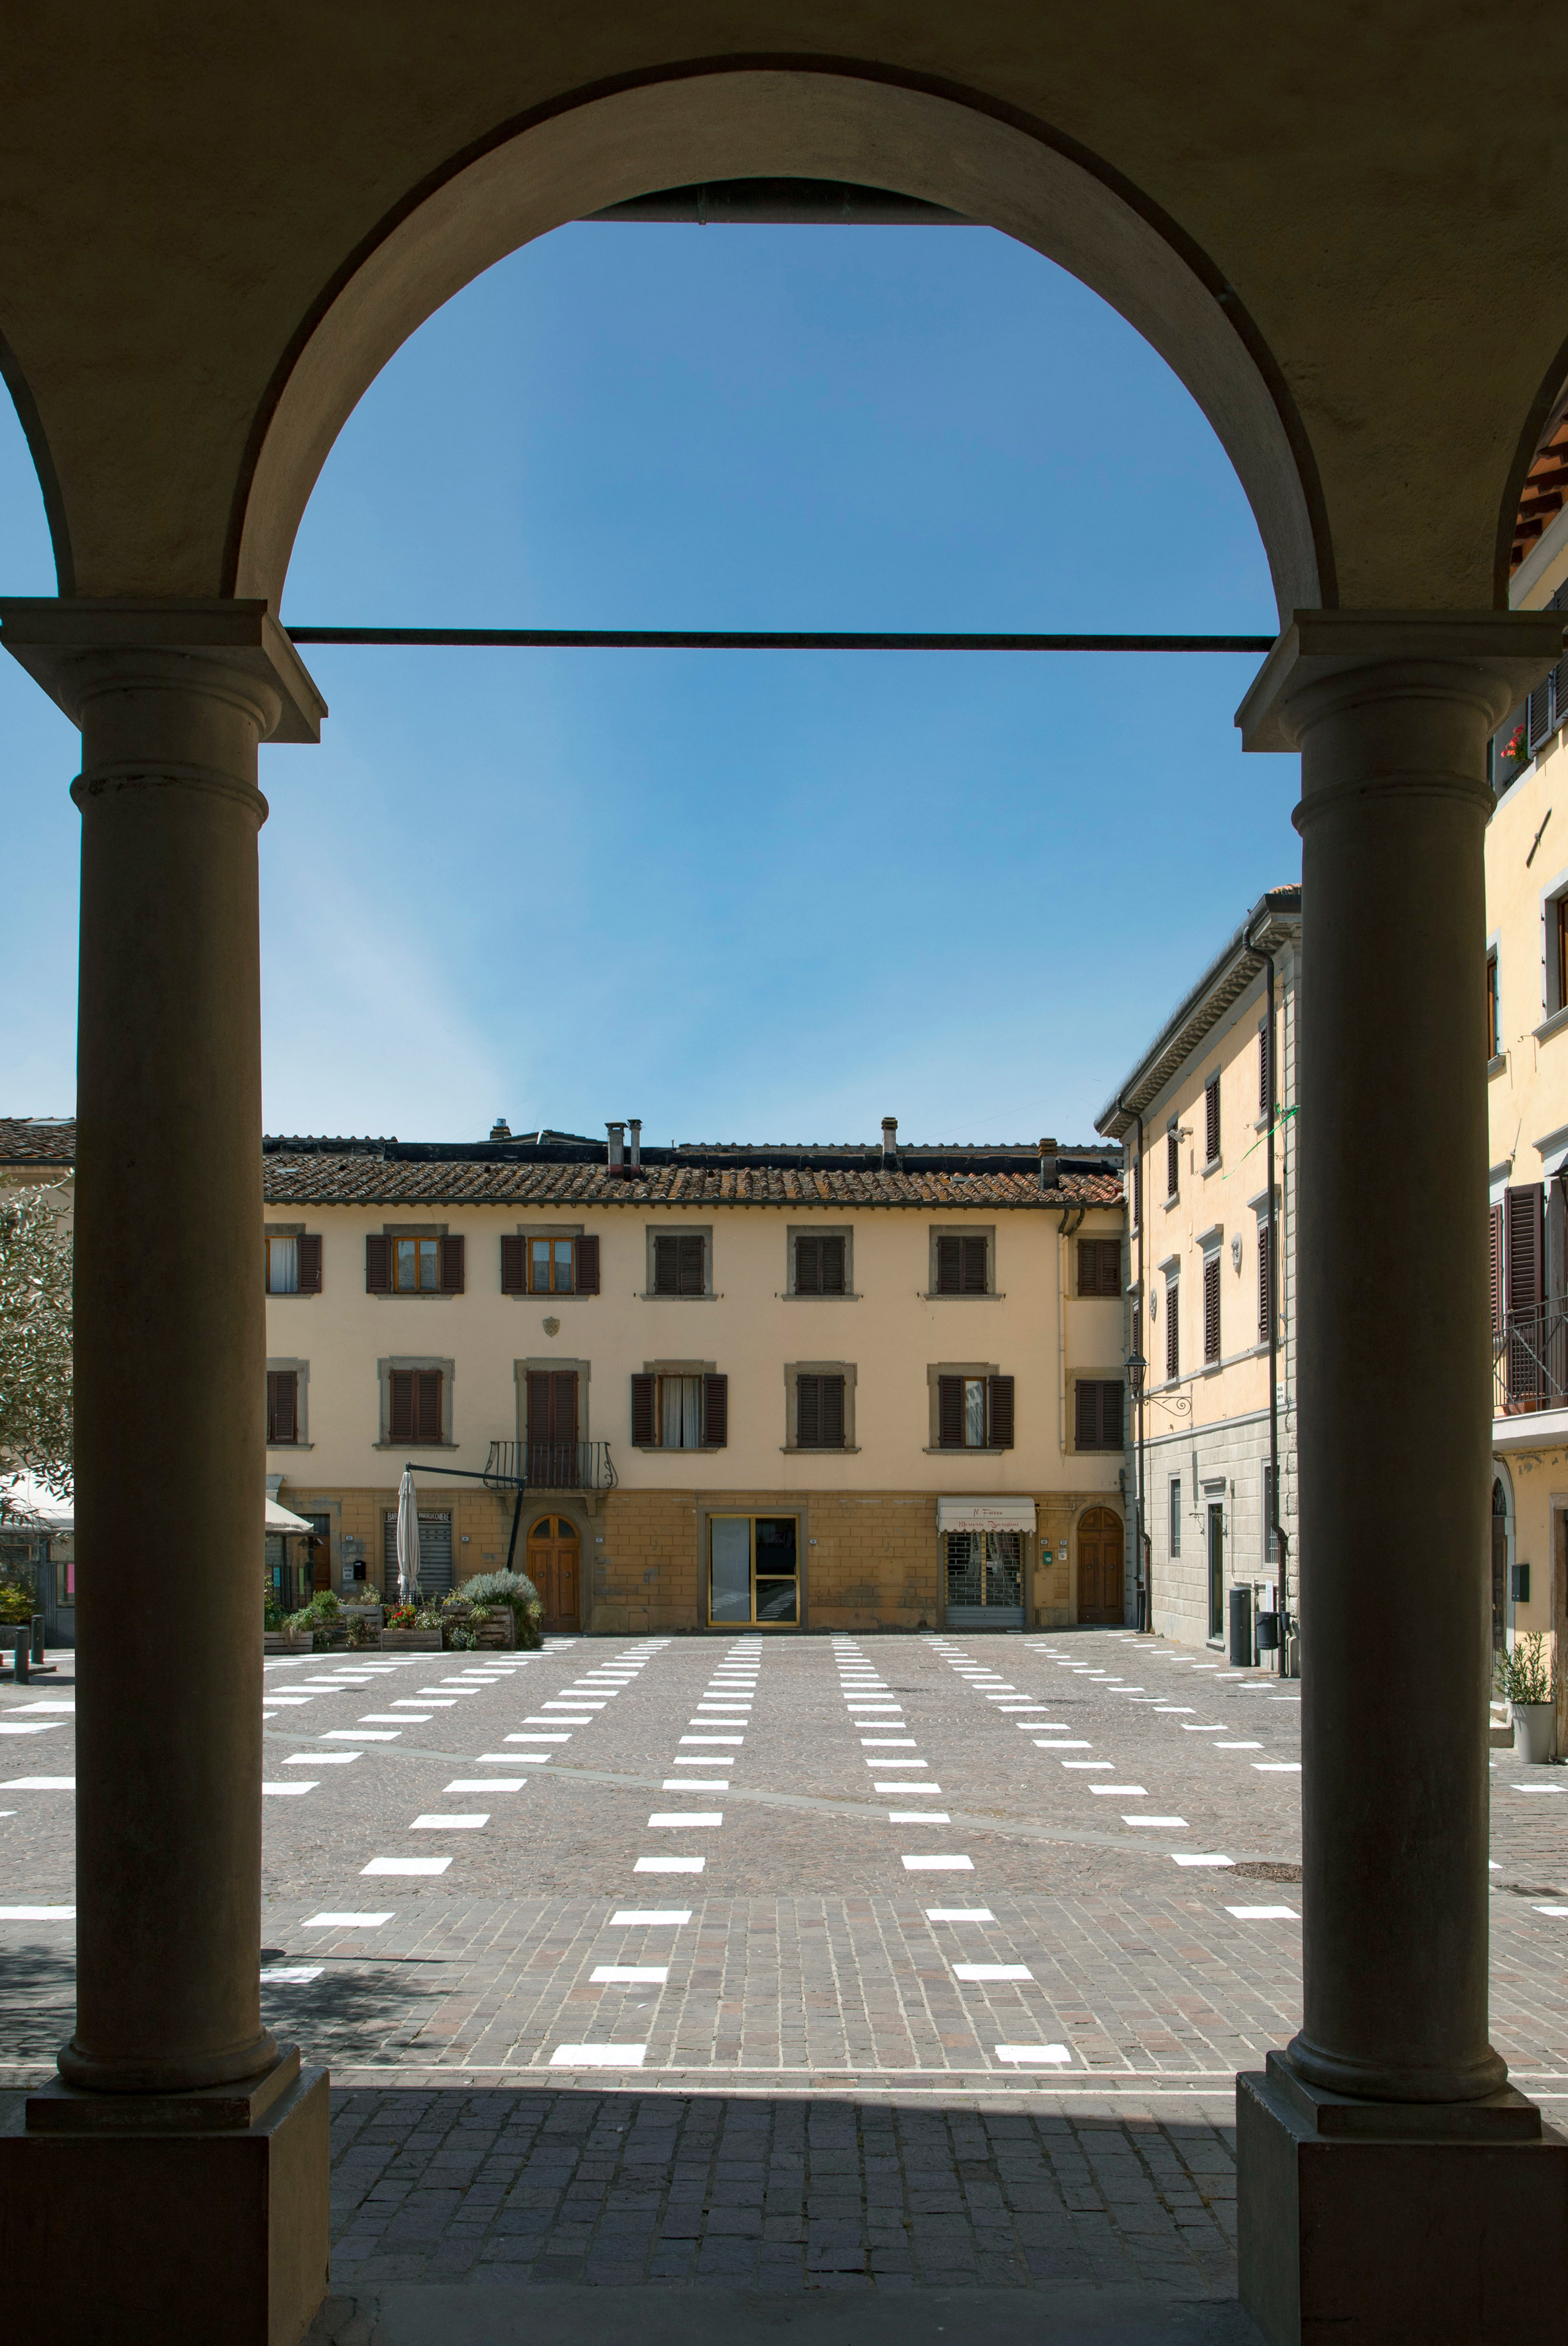 Caret Studio installs grid-like social distancing system in Italian plaza